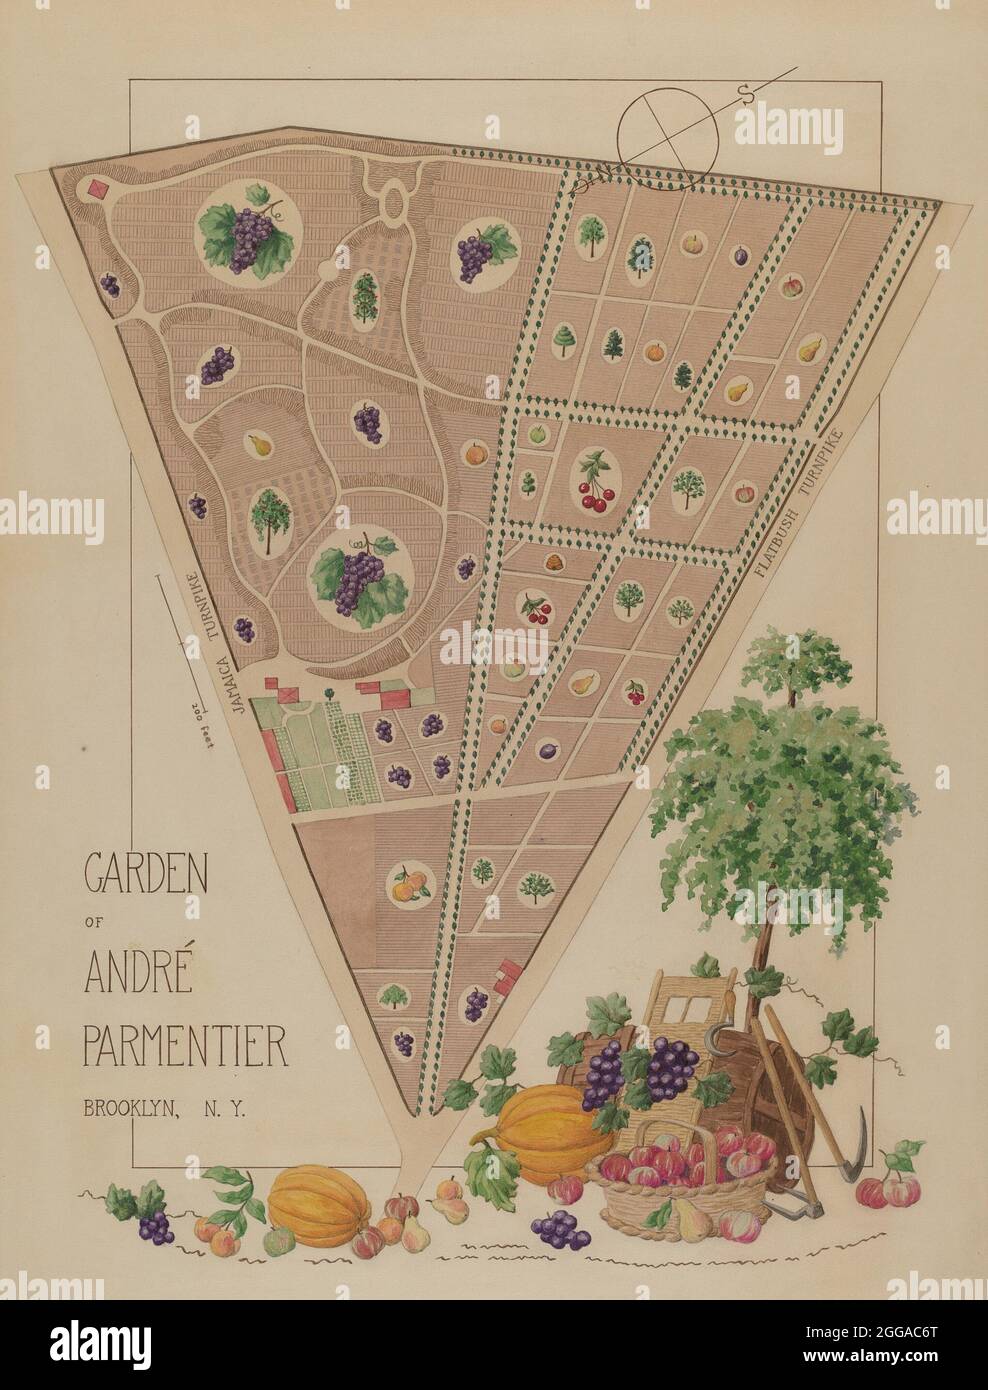 Andre Parmentier Garden, c. 1936. Stock Photo